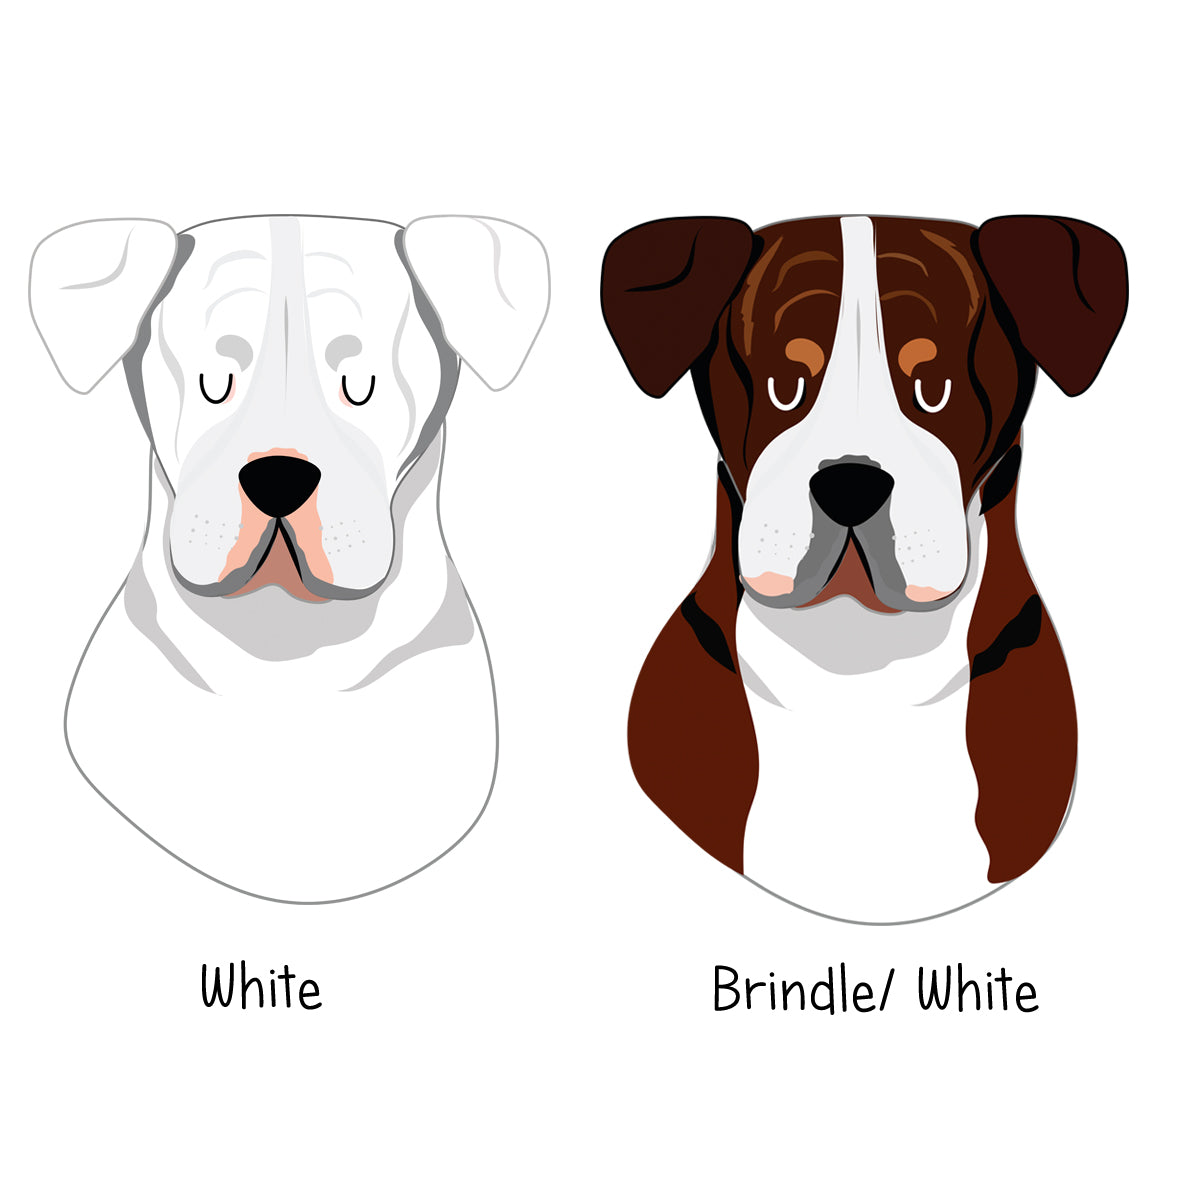 American Bulldog Personalised Treat Training Bag  - Hoobynoo - Personalised Pet Tags and Gifts